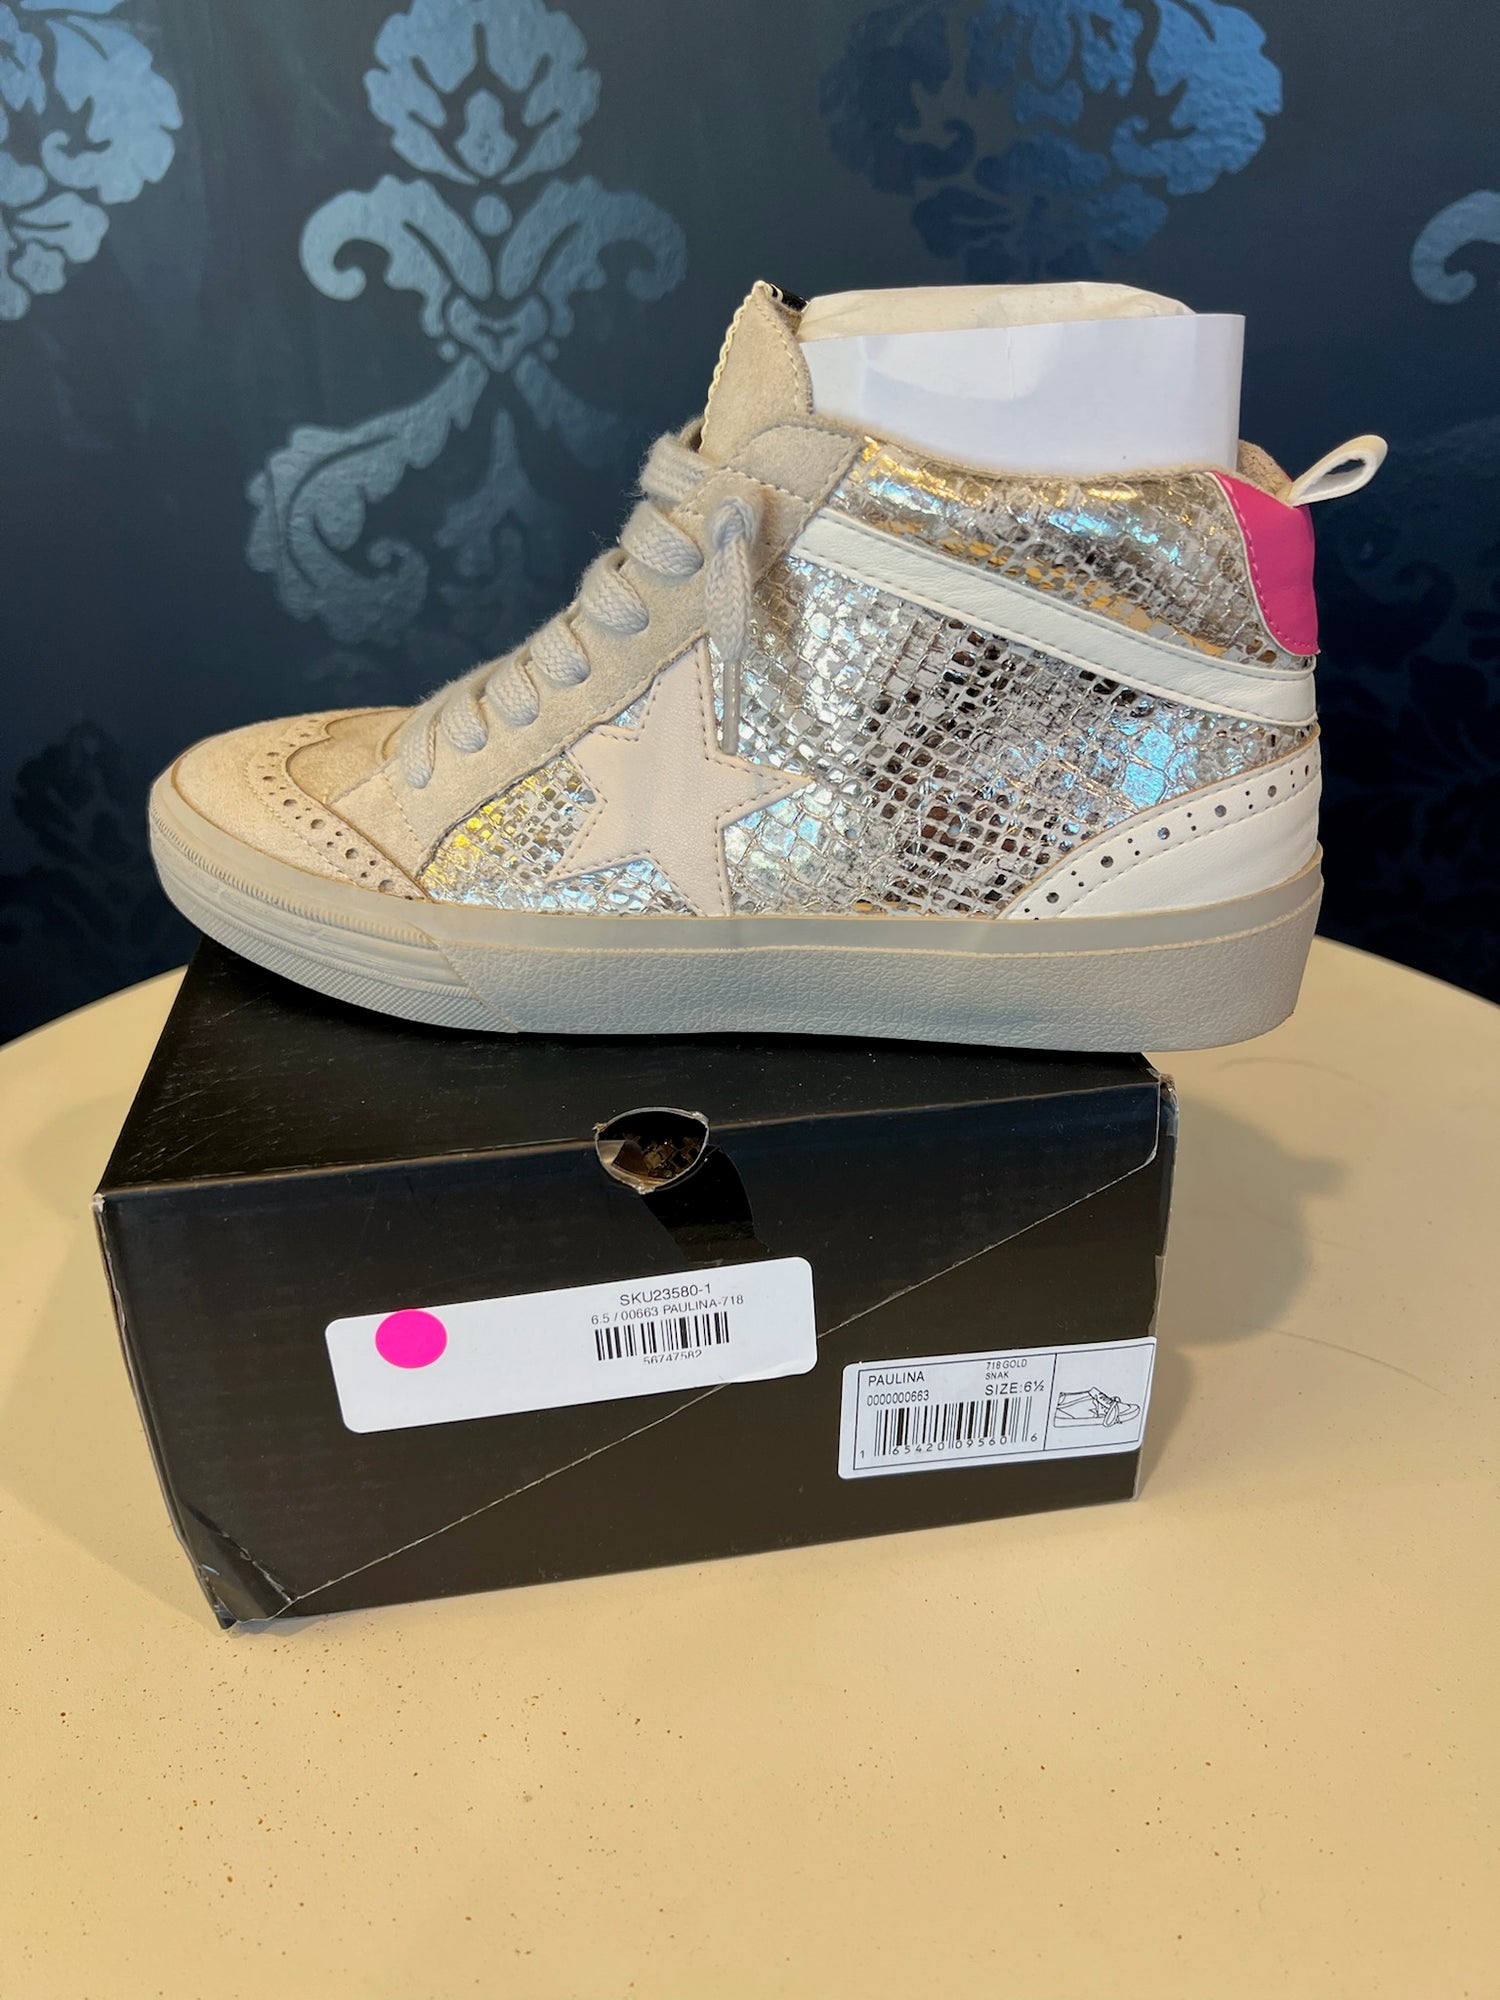 ShuShop Paulina Pink/Gold High Top Sneakers Size 6.5